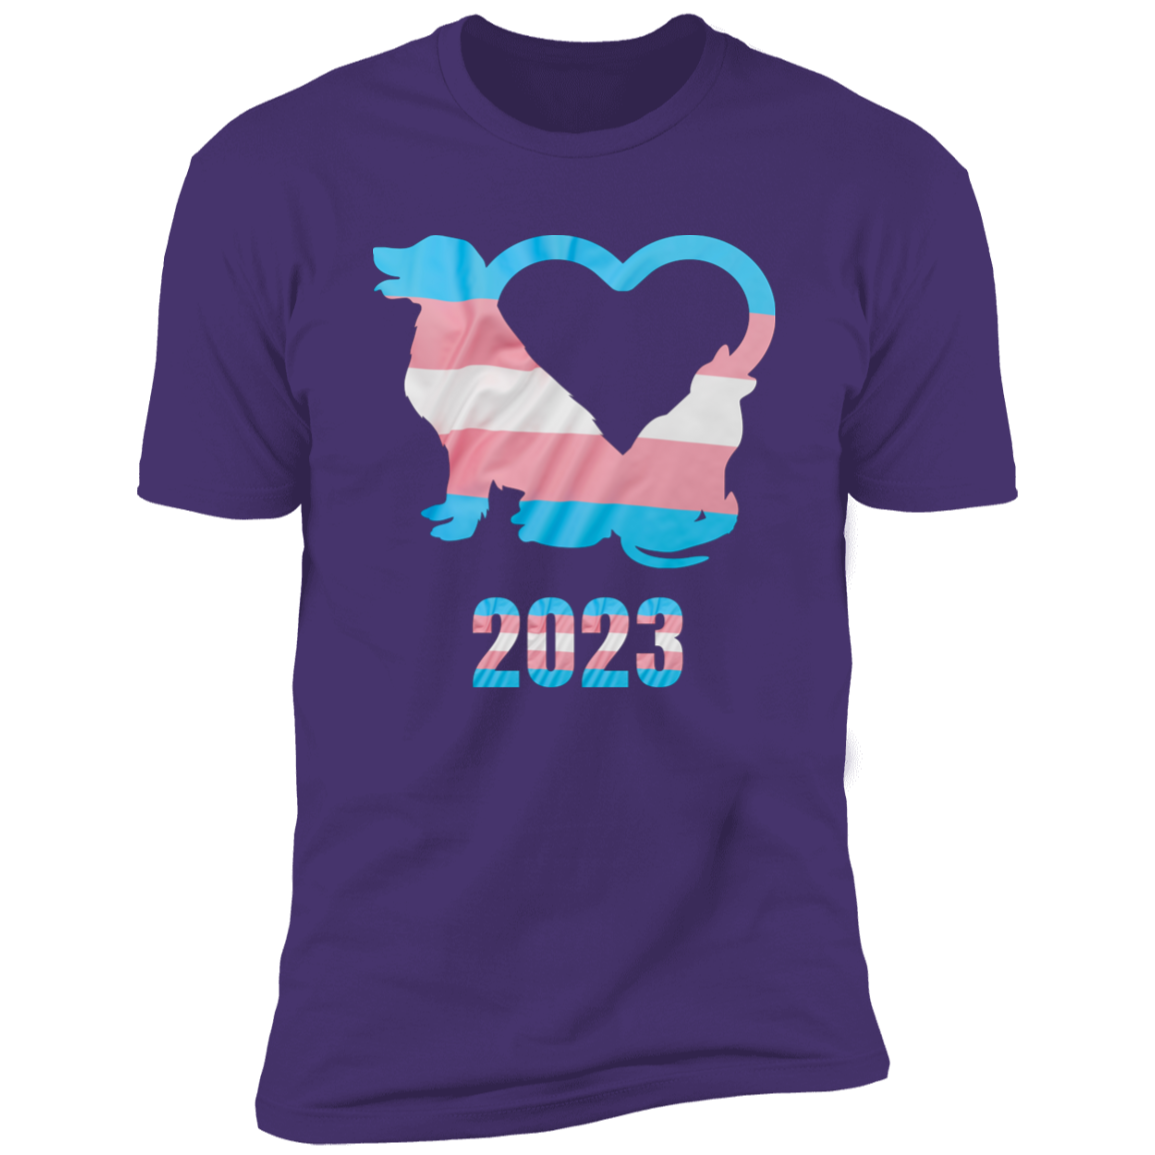 Trans Pride Dog & Cat Heart Pride T-shirt, Trans Pride Dog & Cat Shirt for humans, in purple rush